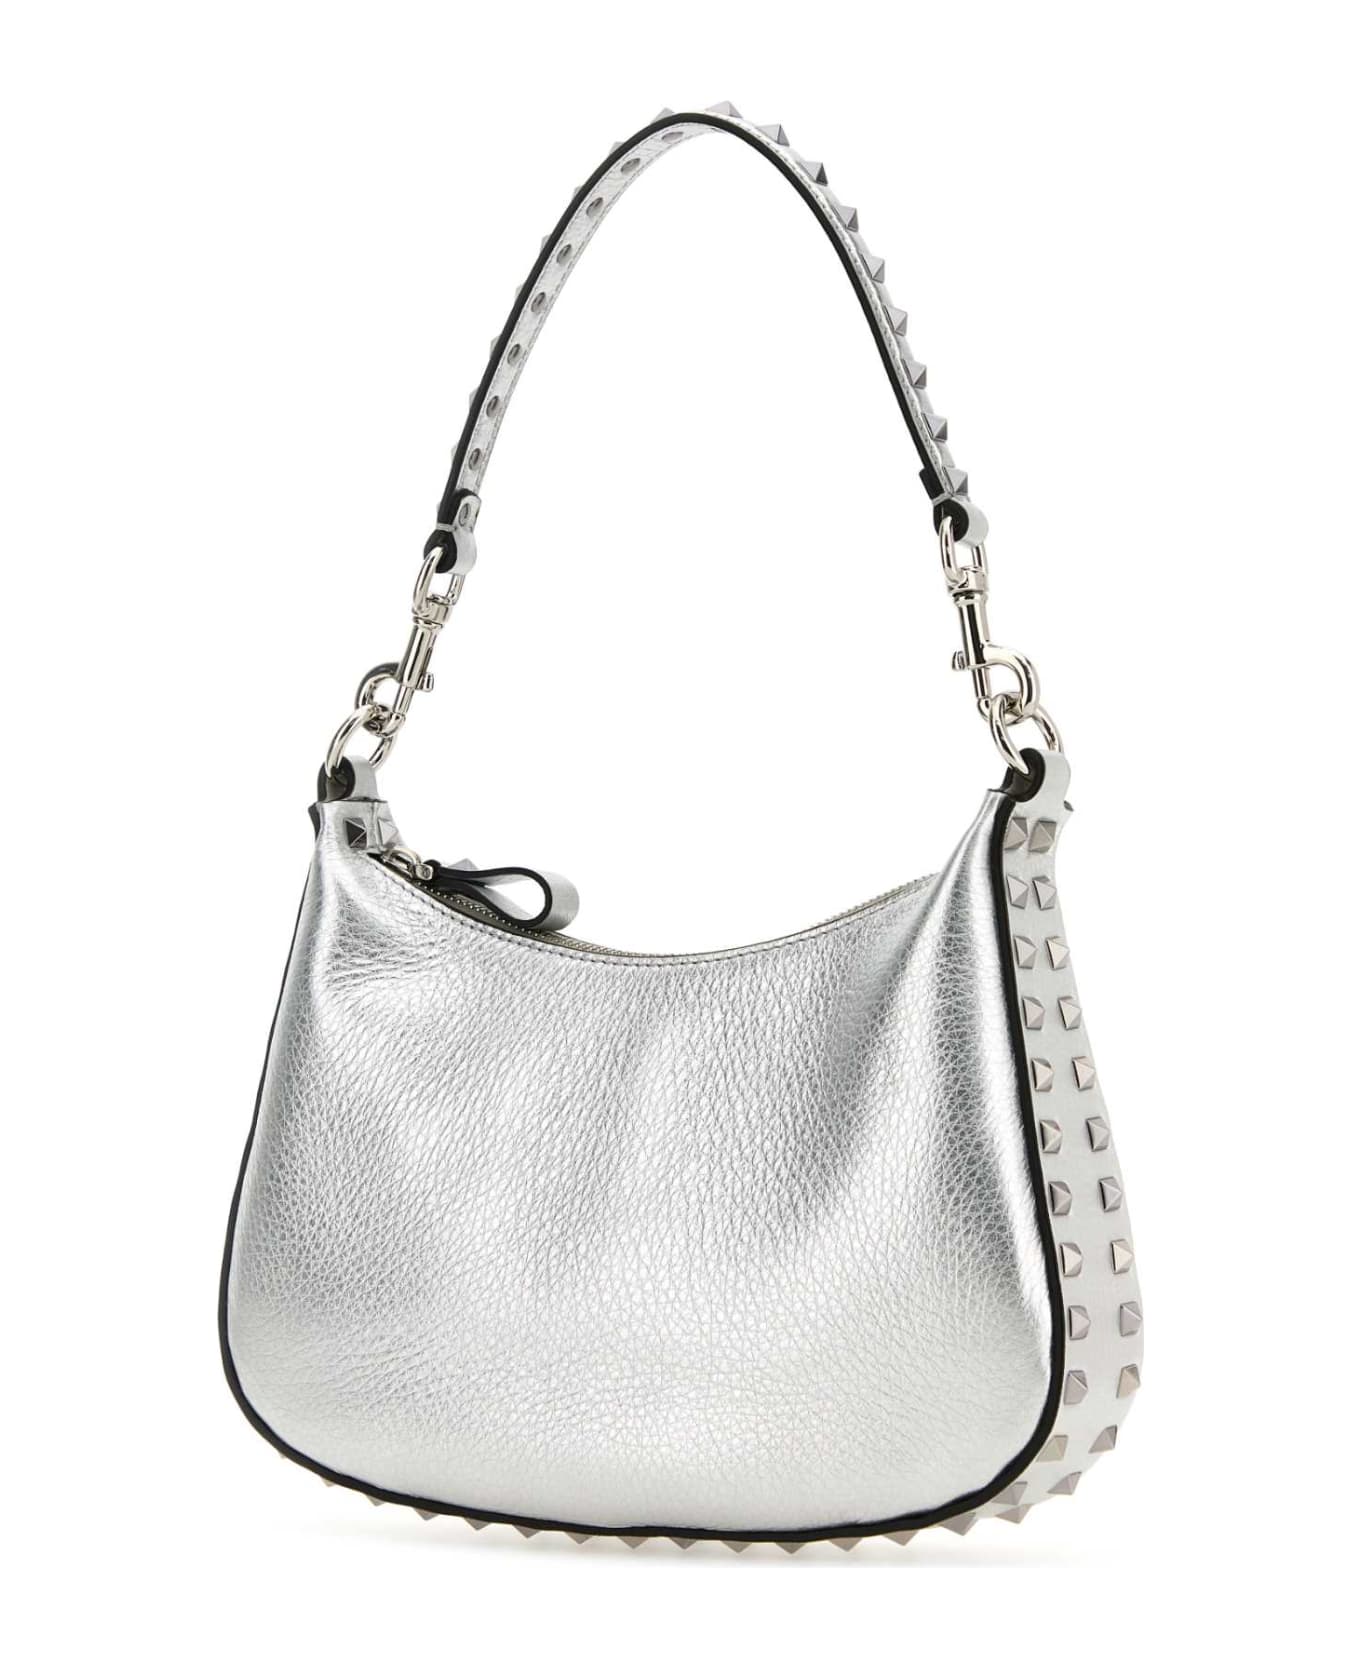 Valentino Garavani Silver Leather Rockstud Handbag - SILVER